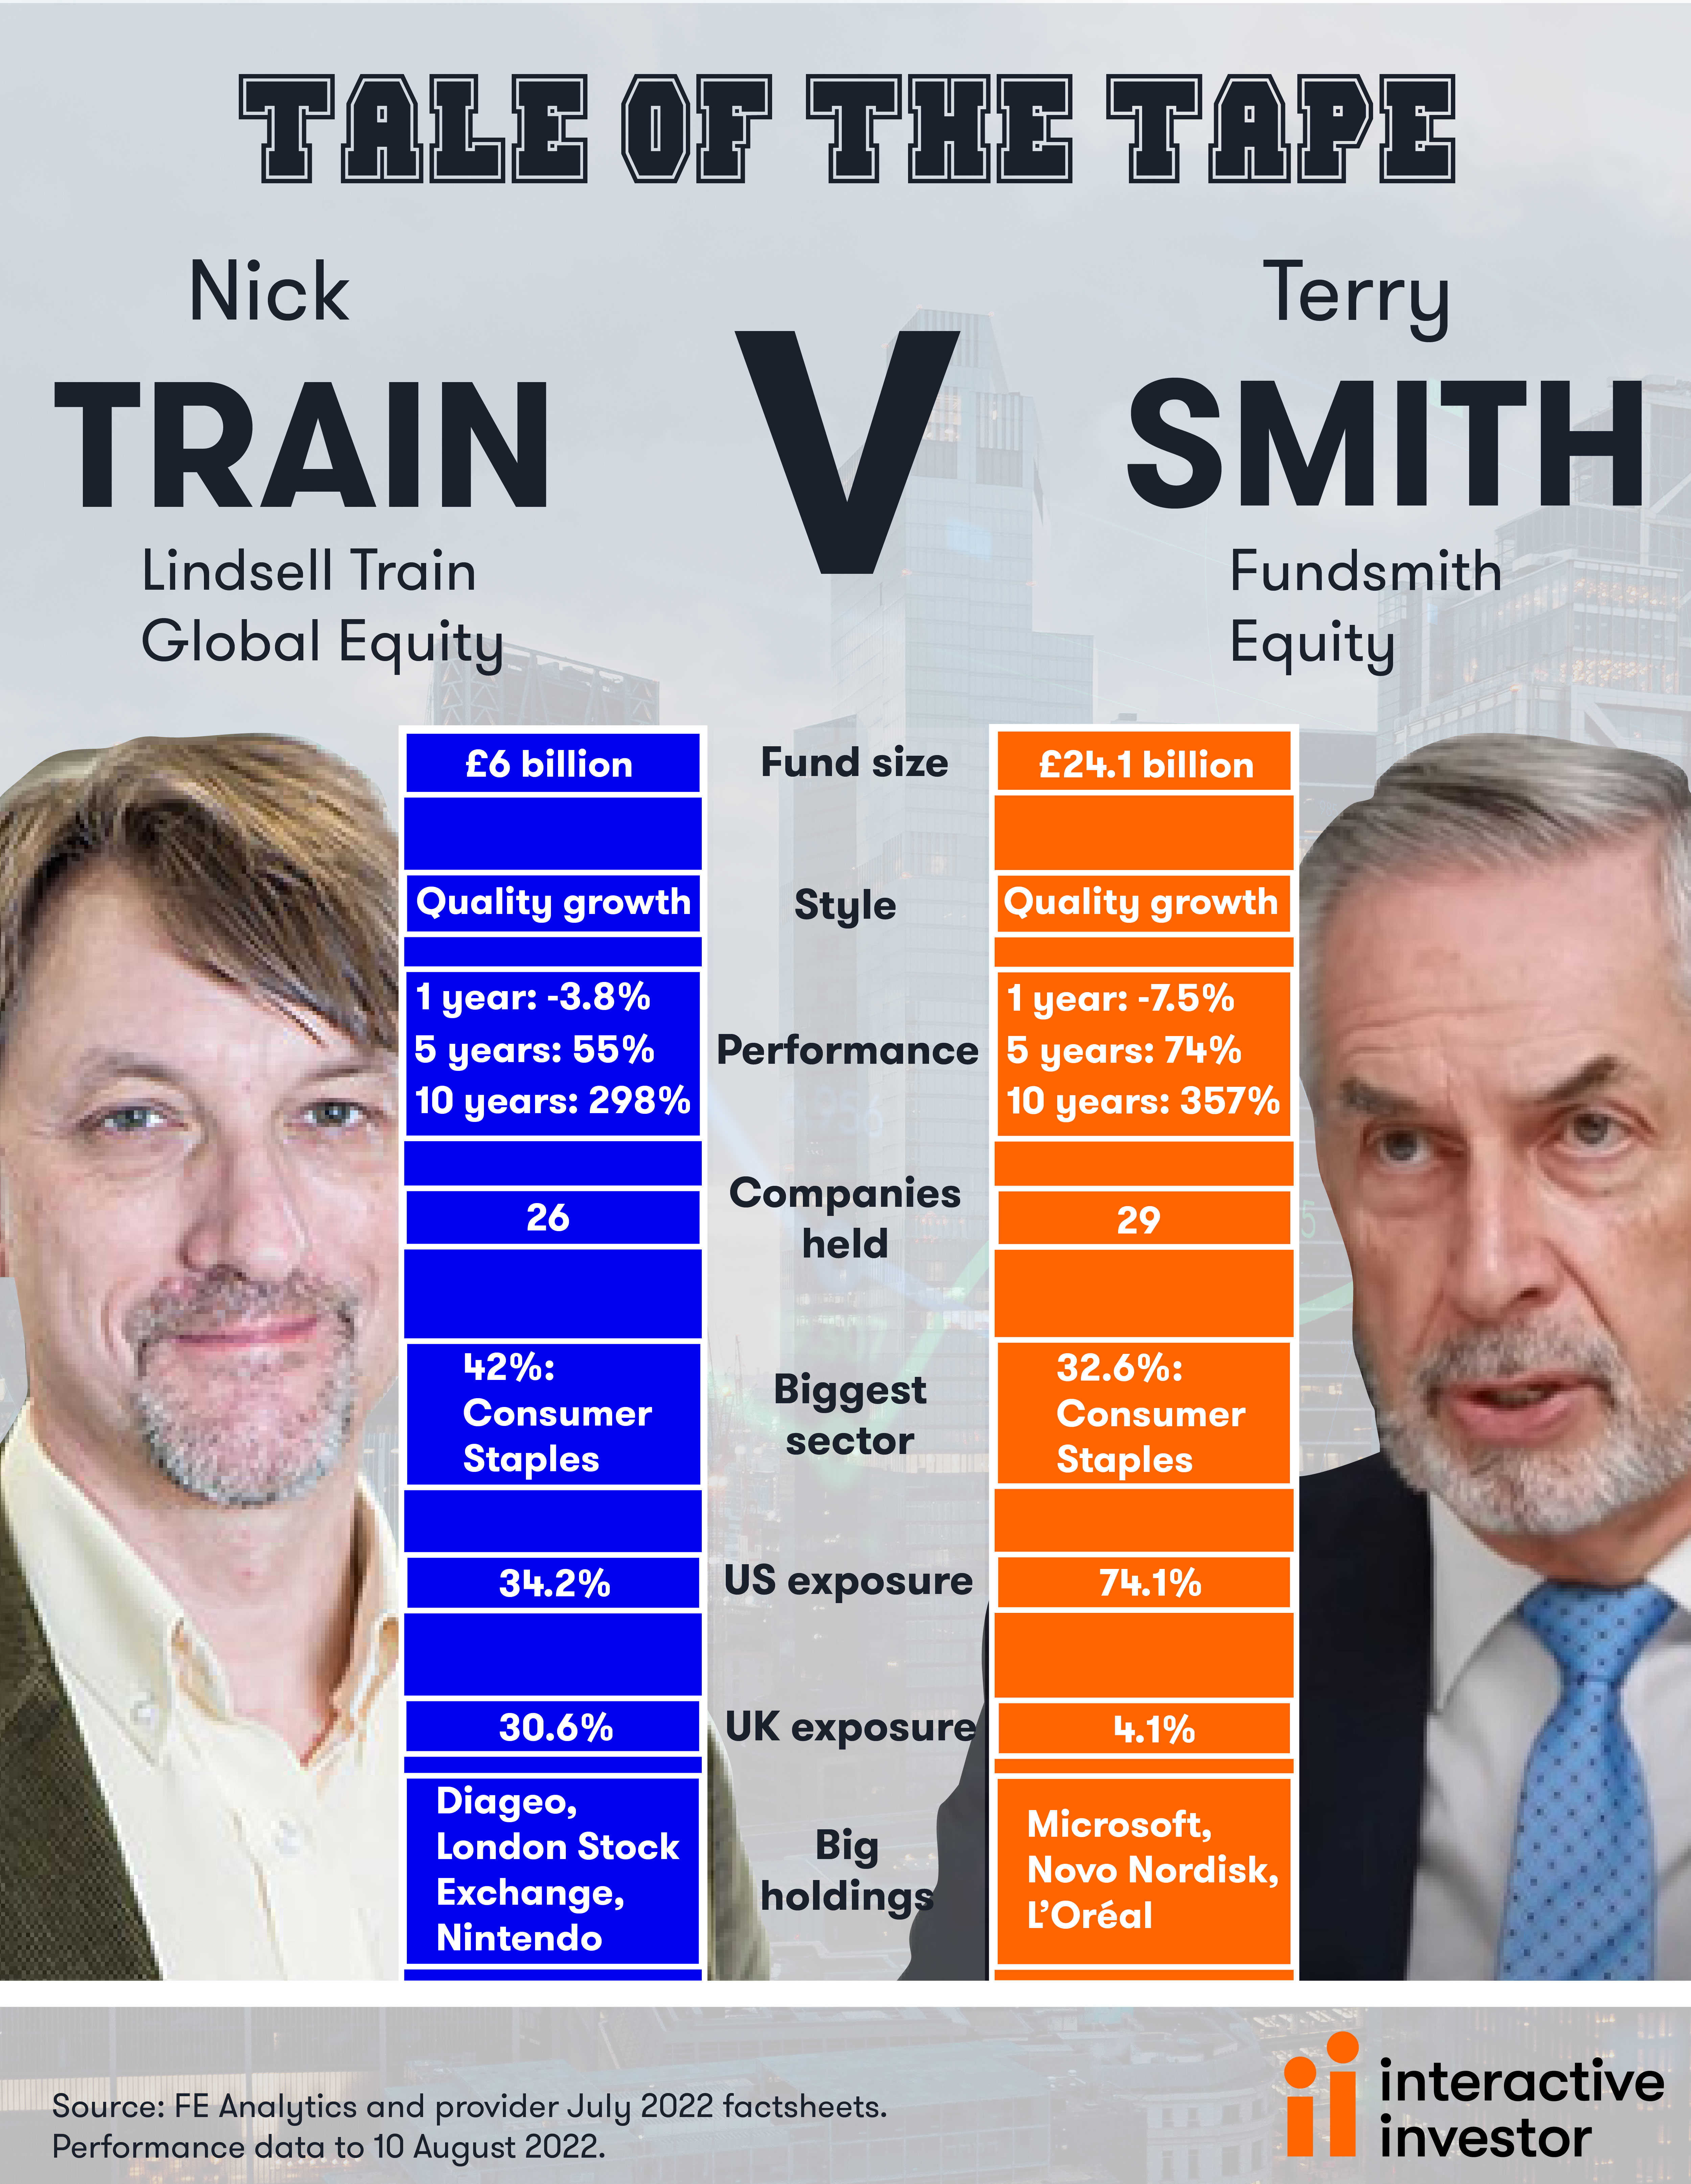 Terry Smith vs Nick Train